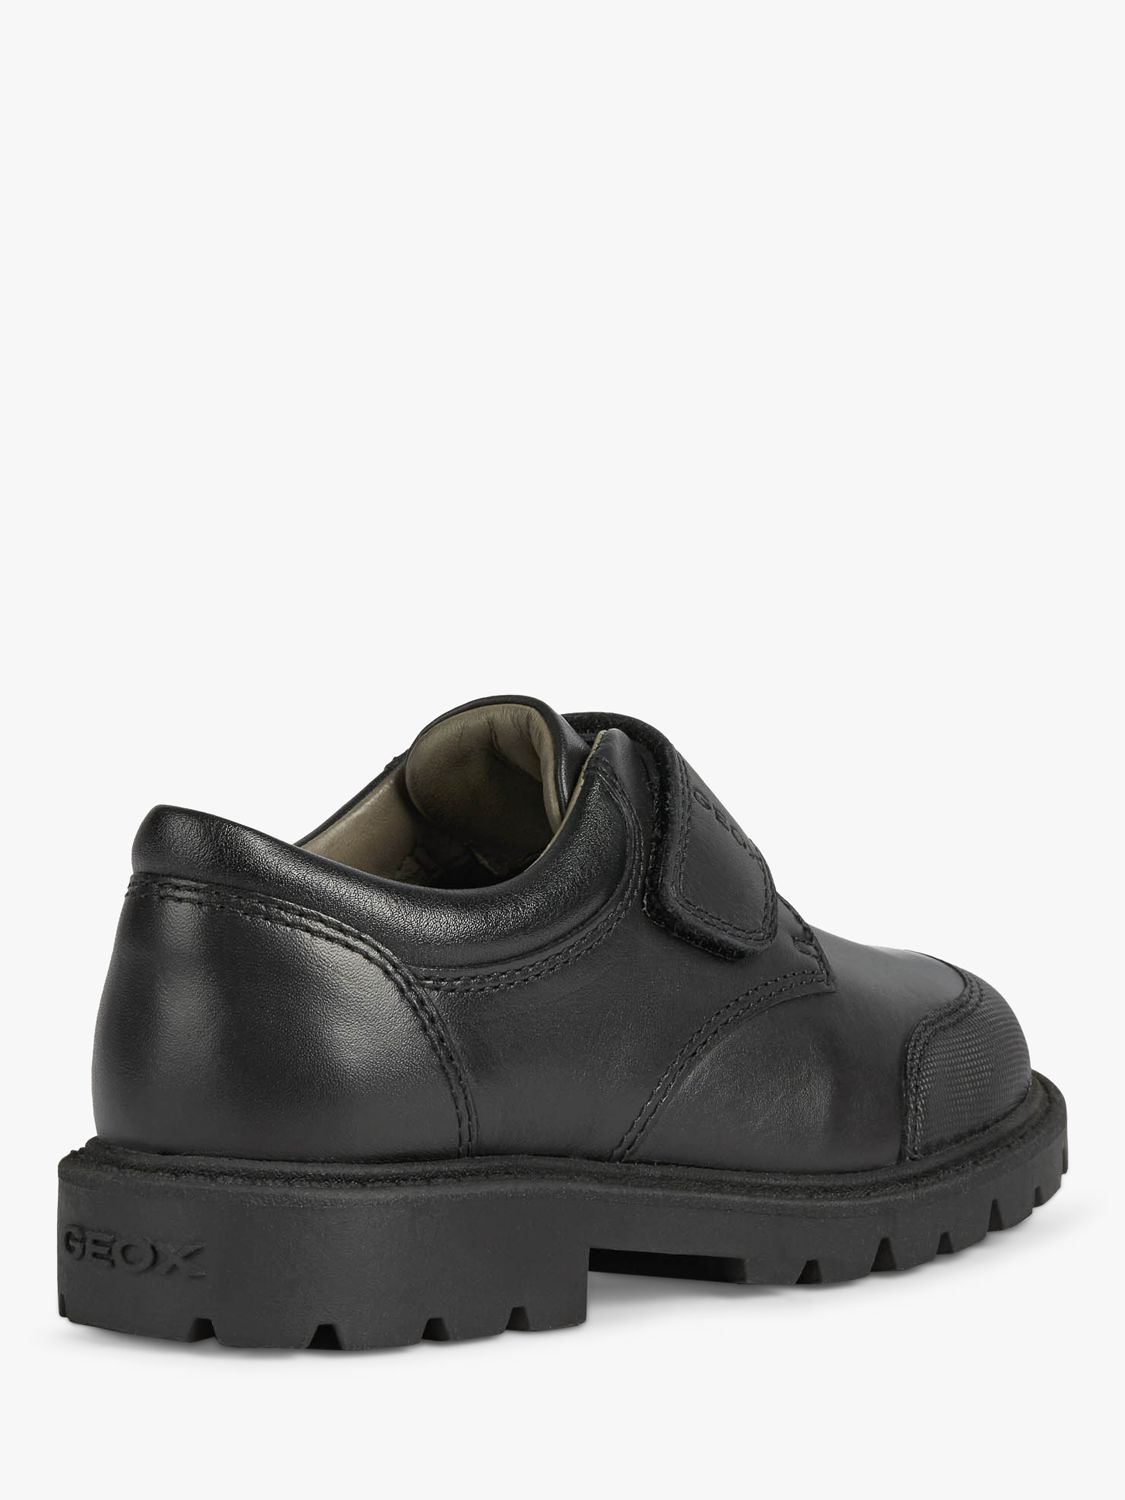 Geox Kids' Shaylax Leather School Shoes, Black, EU35